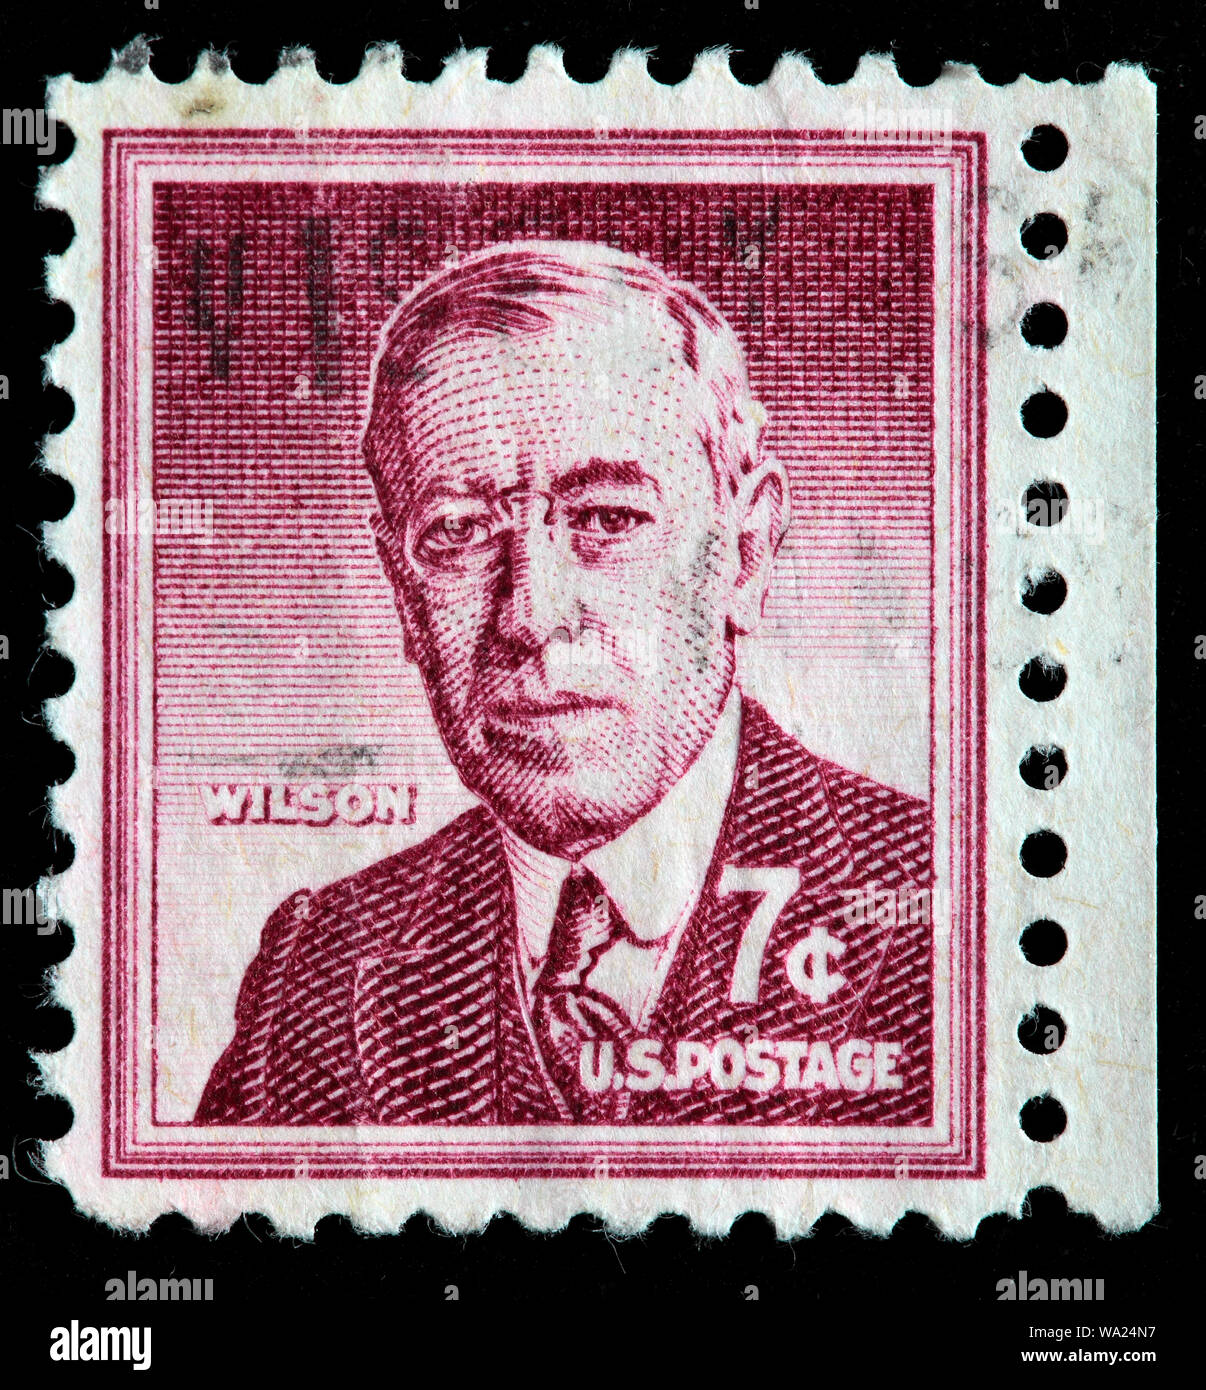 Woodrow Wilson (1856-1924), President of USA, postage stamp, USA, 1956 Stock Photo